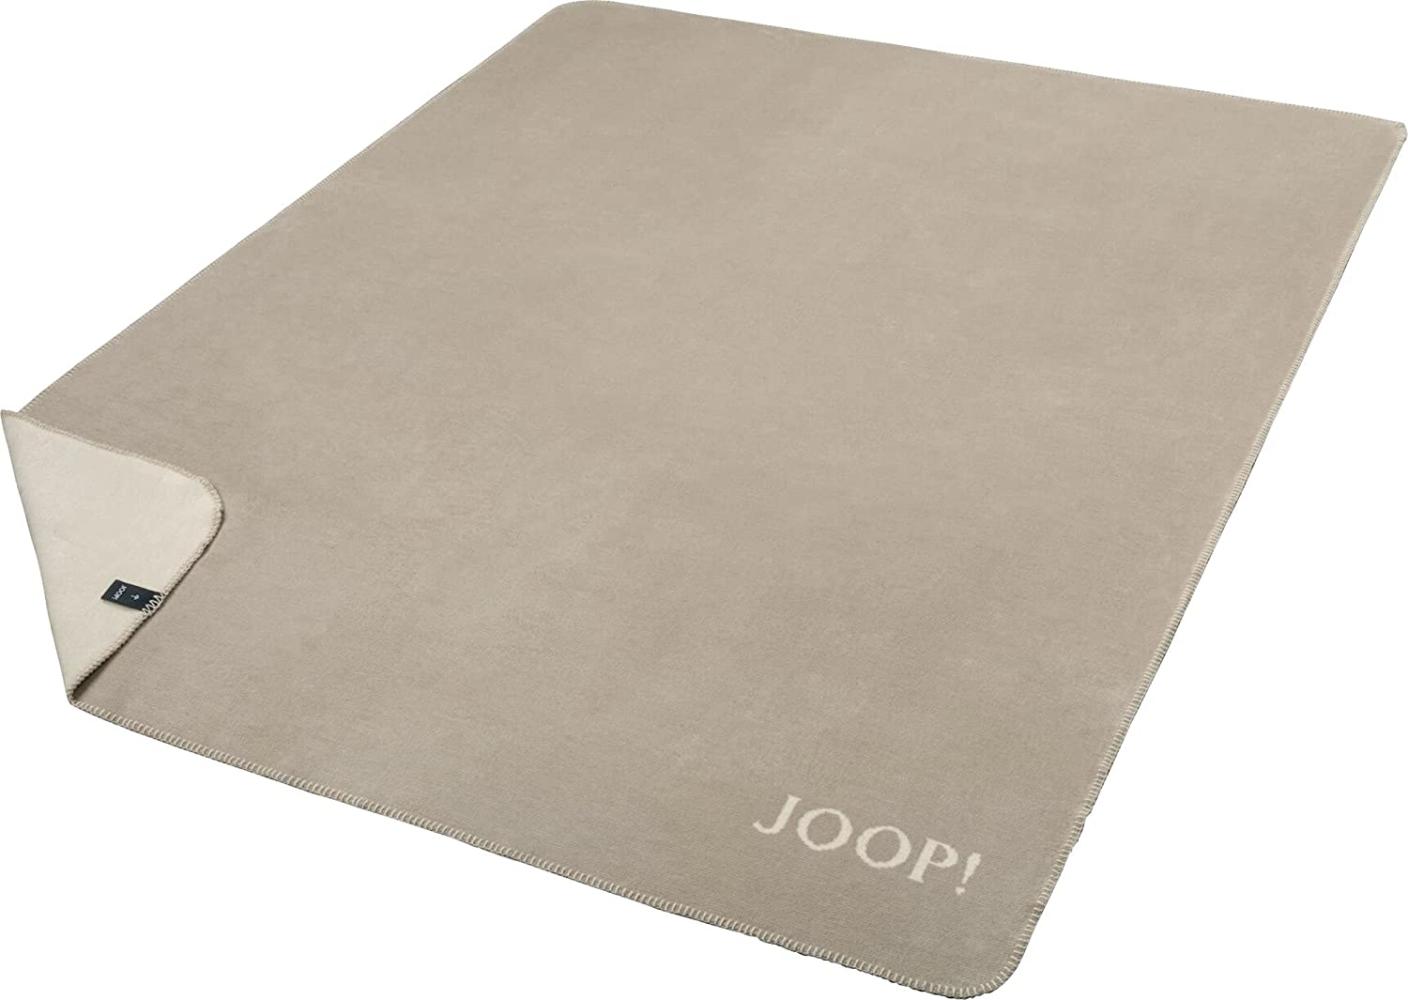 JOOP! Plaid / Decke MELANGE Doubleface Stein-Natur 150 x 200 cm Bild 1